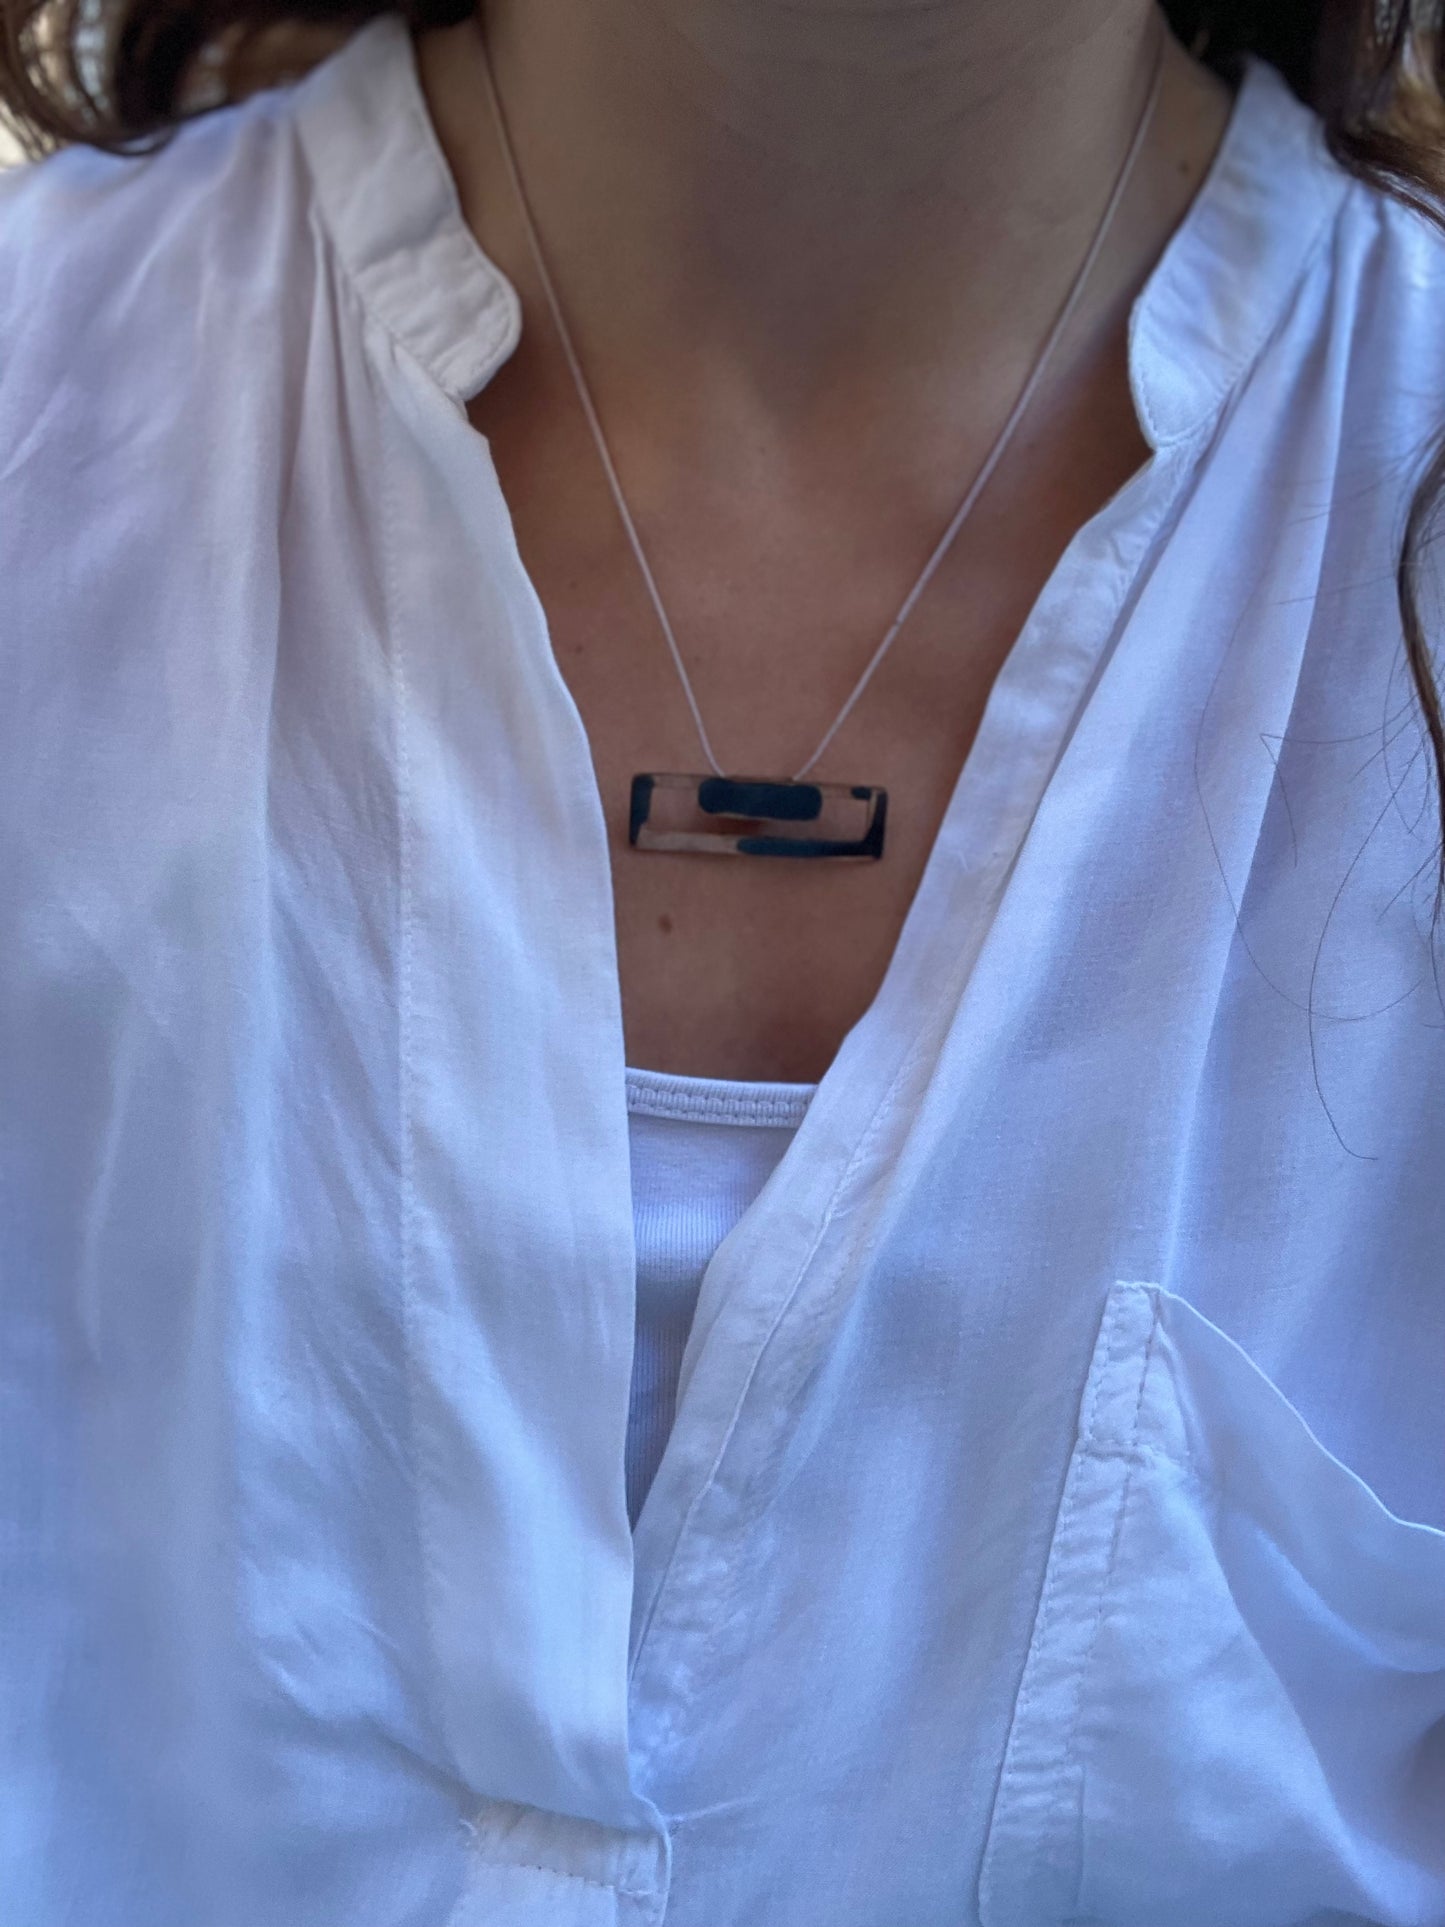 Oxidised copper necklace | Rose - Black Internal Ideas Necklace - CURIUDO